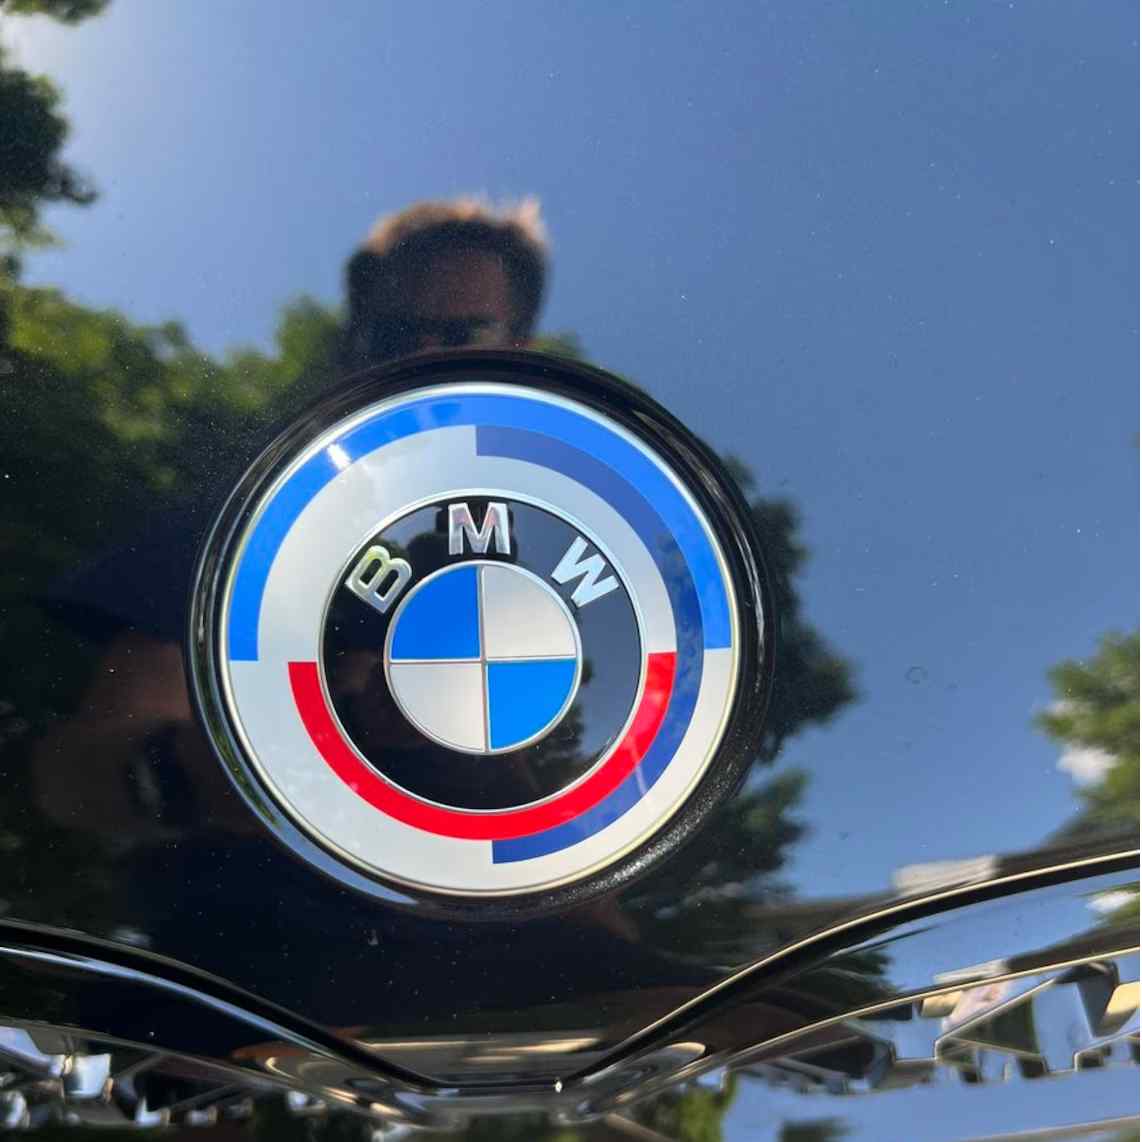 Emblema BMW 82 MM 2 Pines autoadhesivo 50 Aniversario (para capó/maletero)  - E-DZSHOP AUTOPARTS